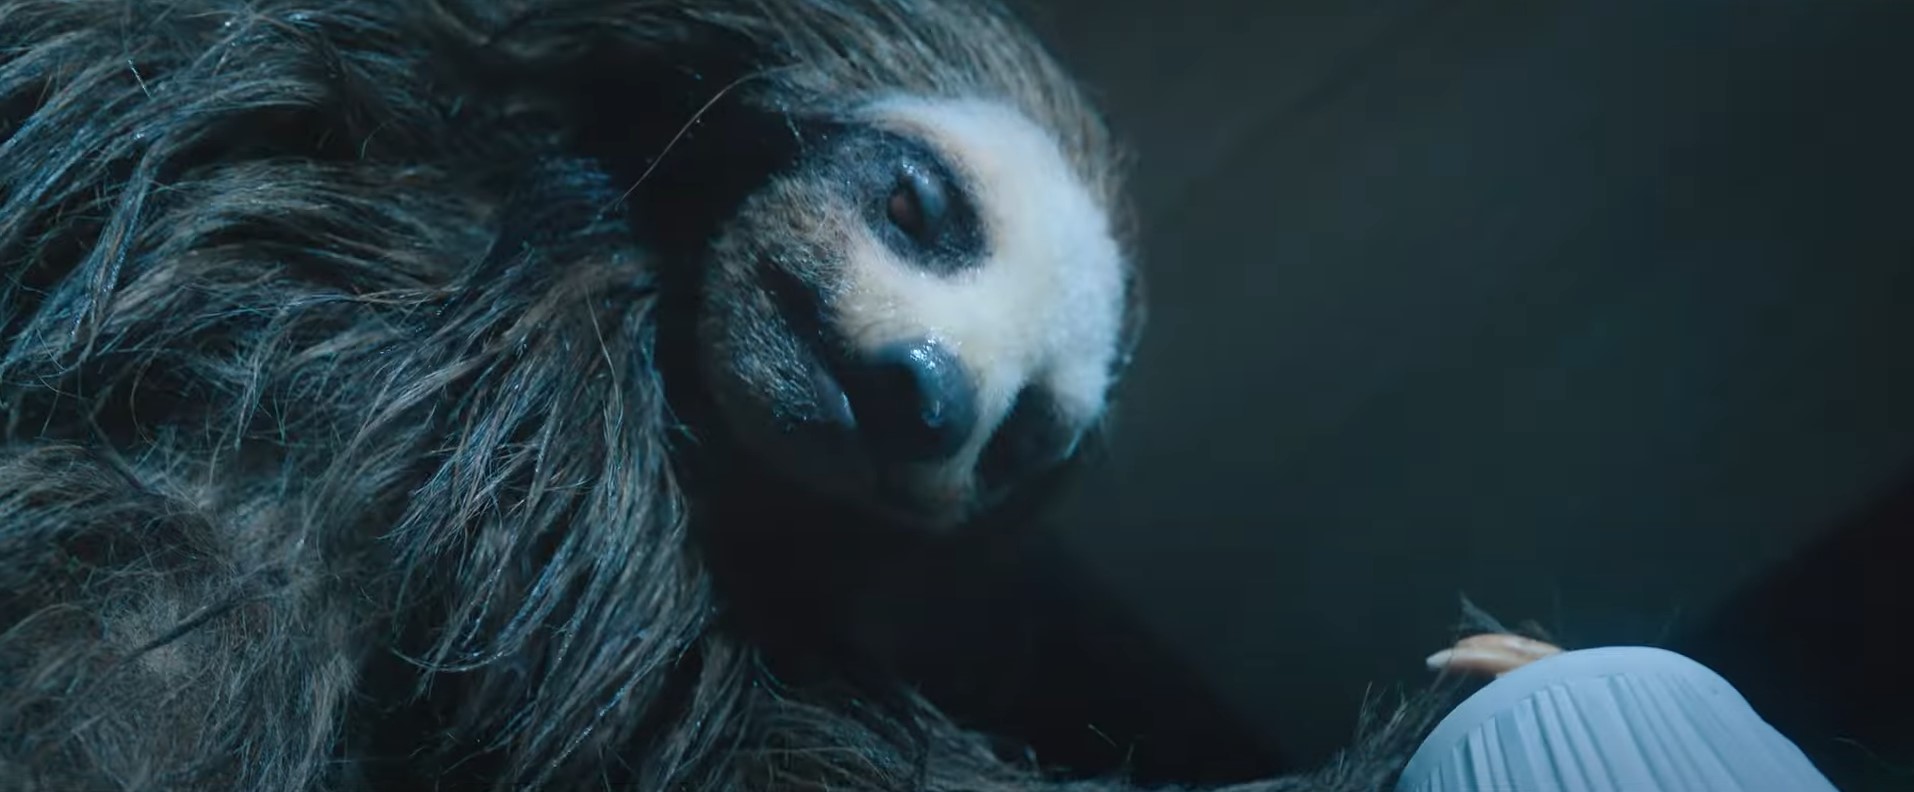 Slotherhouse trailer - killer sloth Alpha